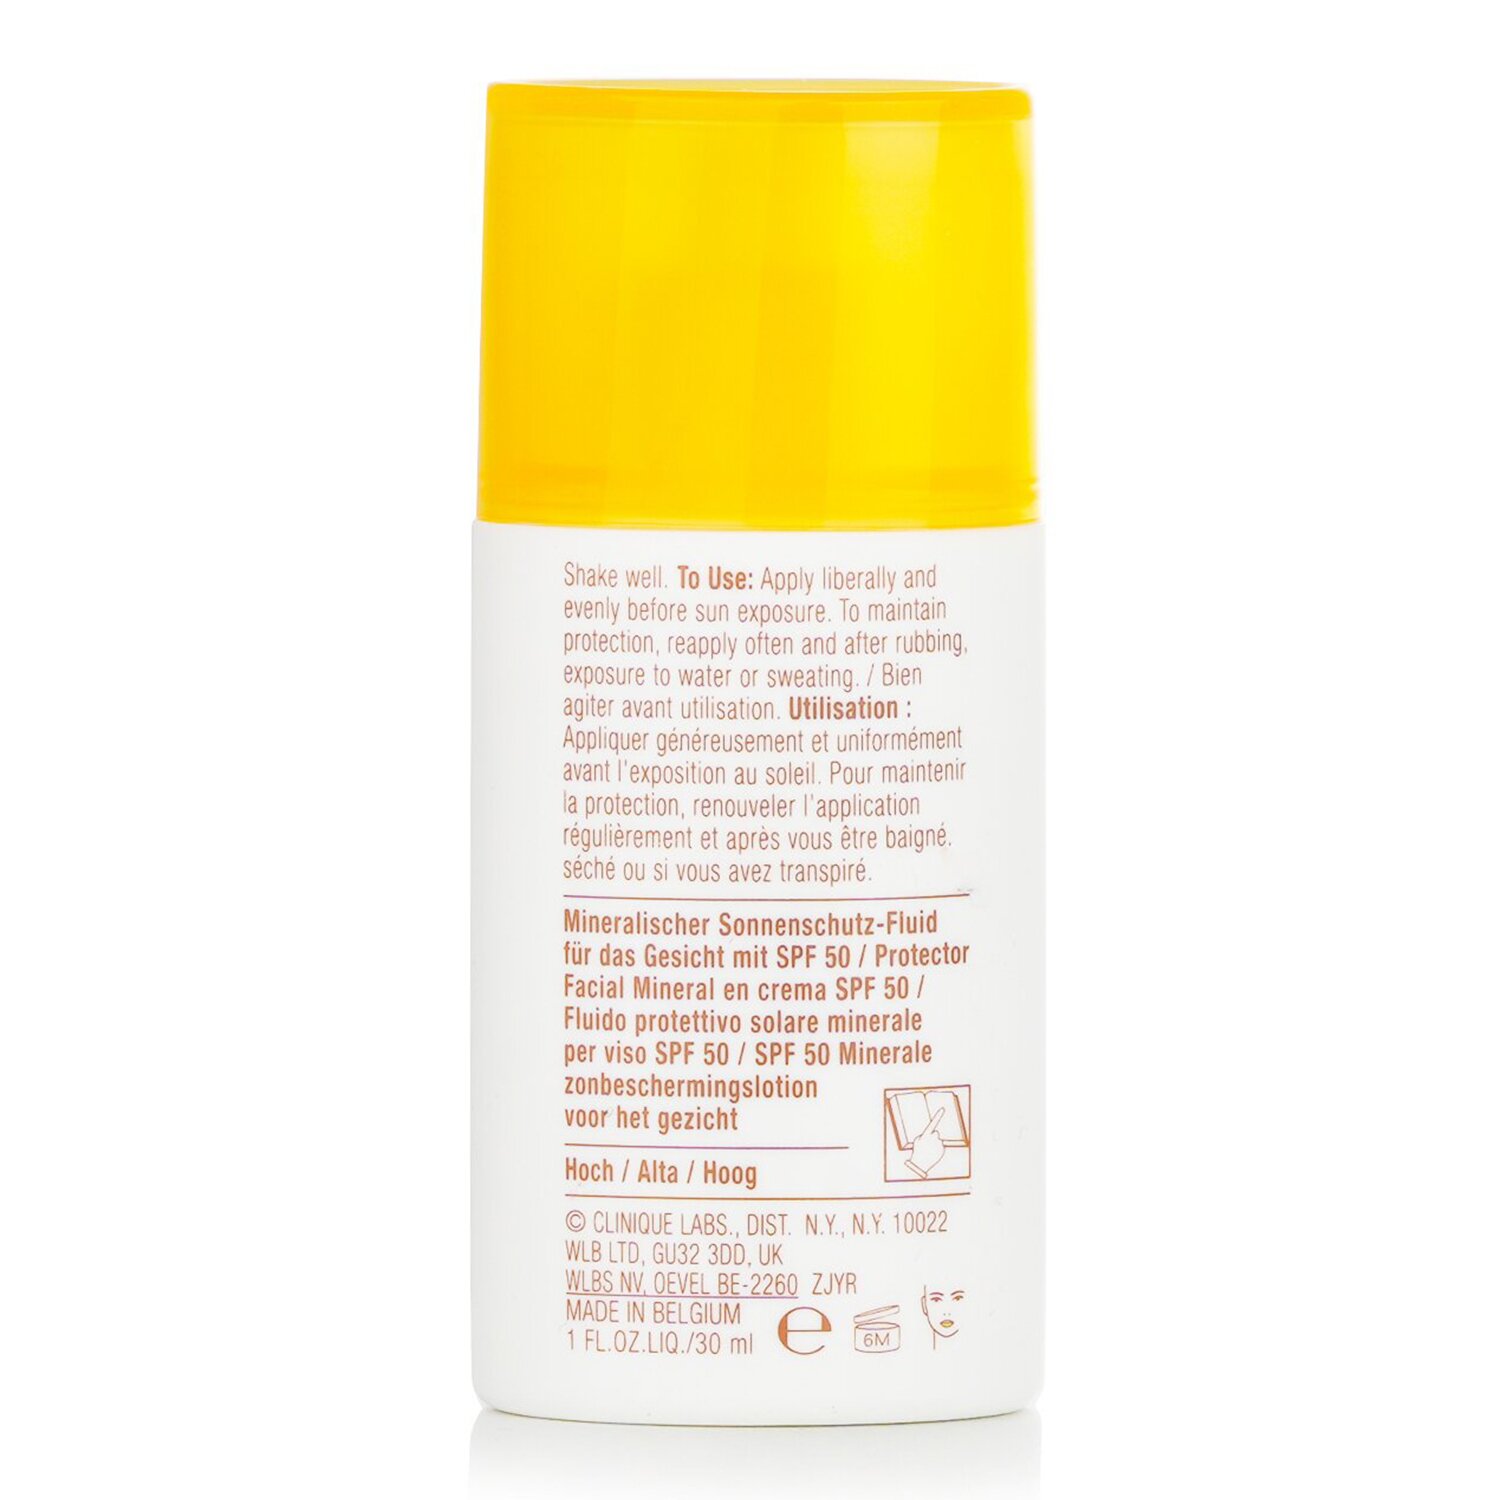 Clinique Mineral Sunscreen Fluid For Face SPF 50 - Formulasi Kulit Sensitif - Tabir Surya Untuk Wajah 30ml/1oz